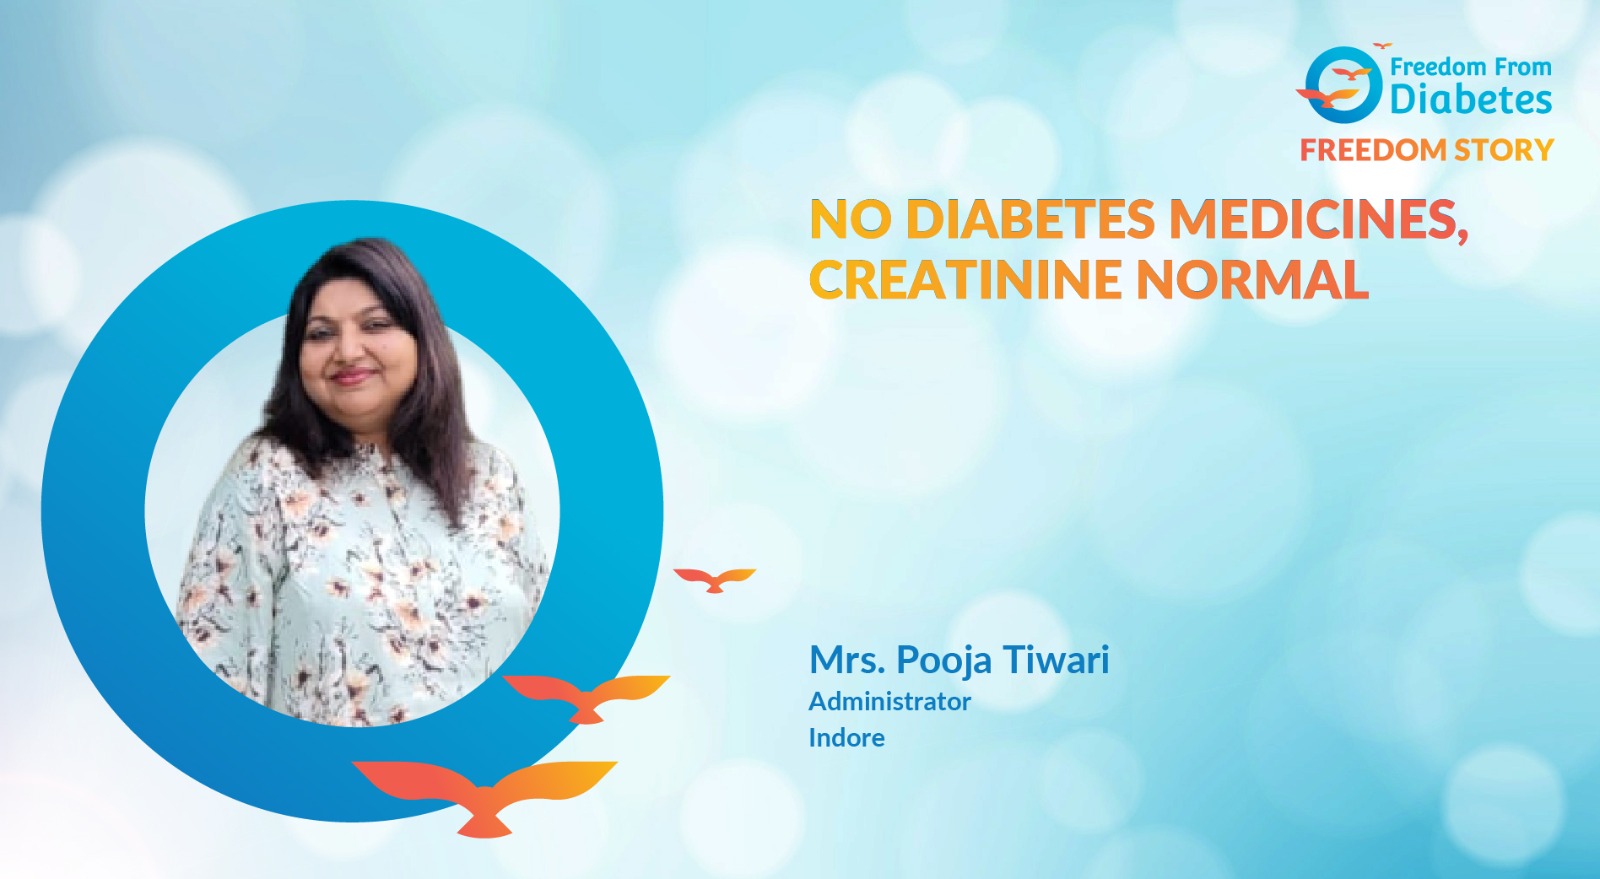 Pooja Tiwari: Diabetes and co-morbidity reversal story